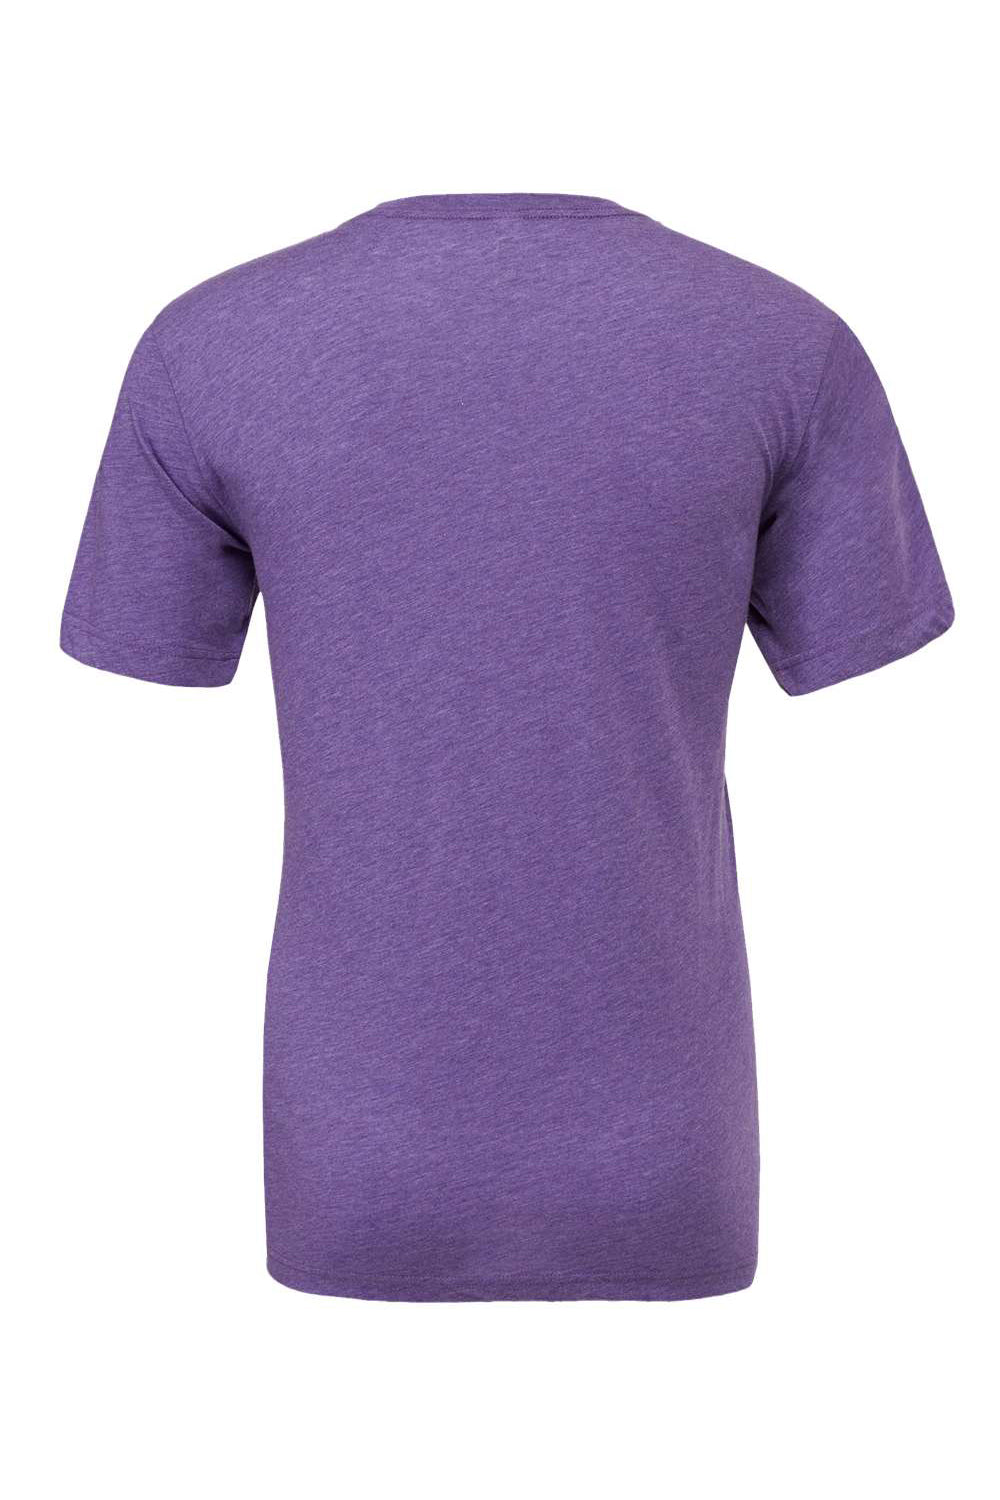 Bella + Canvas BC3413/3413C/3413 Mens Short Sleeve Crewneck T-Shirt Purple Flat Back